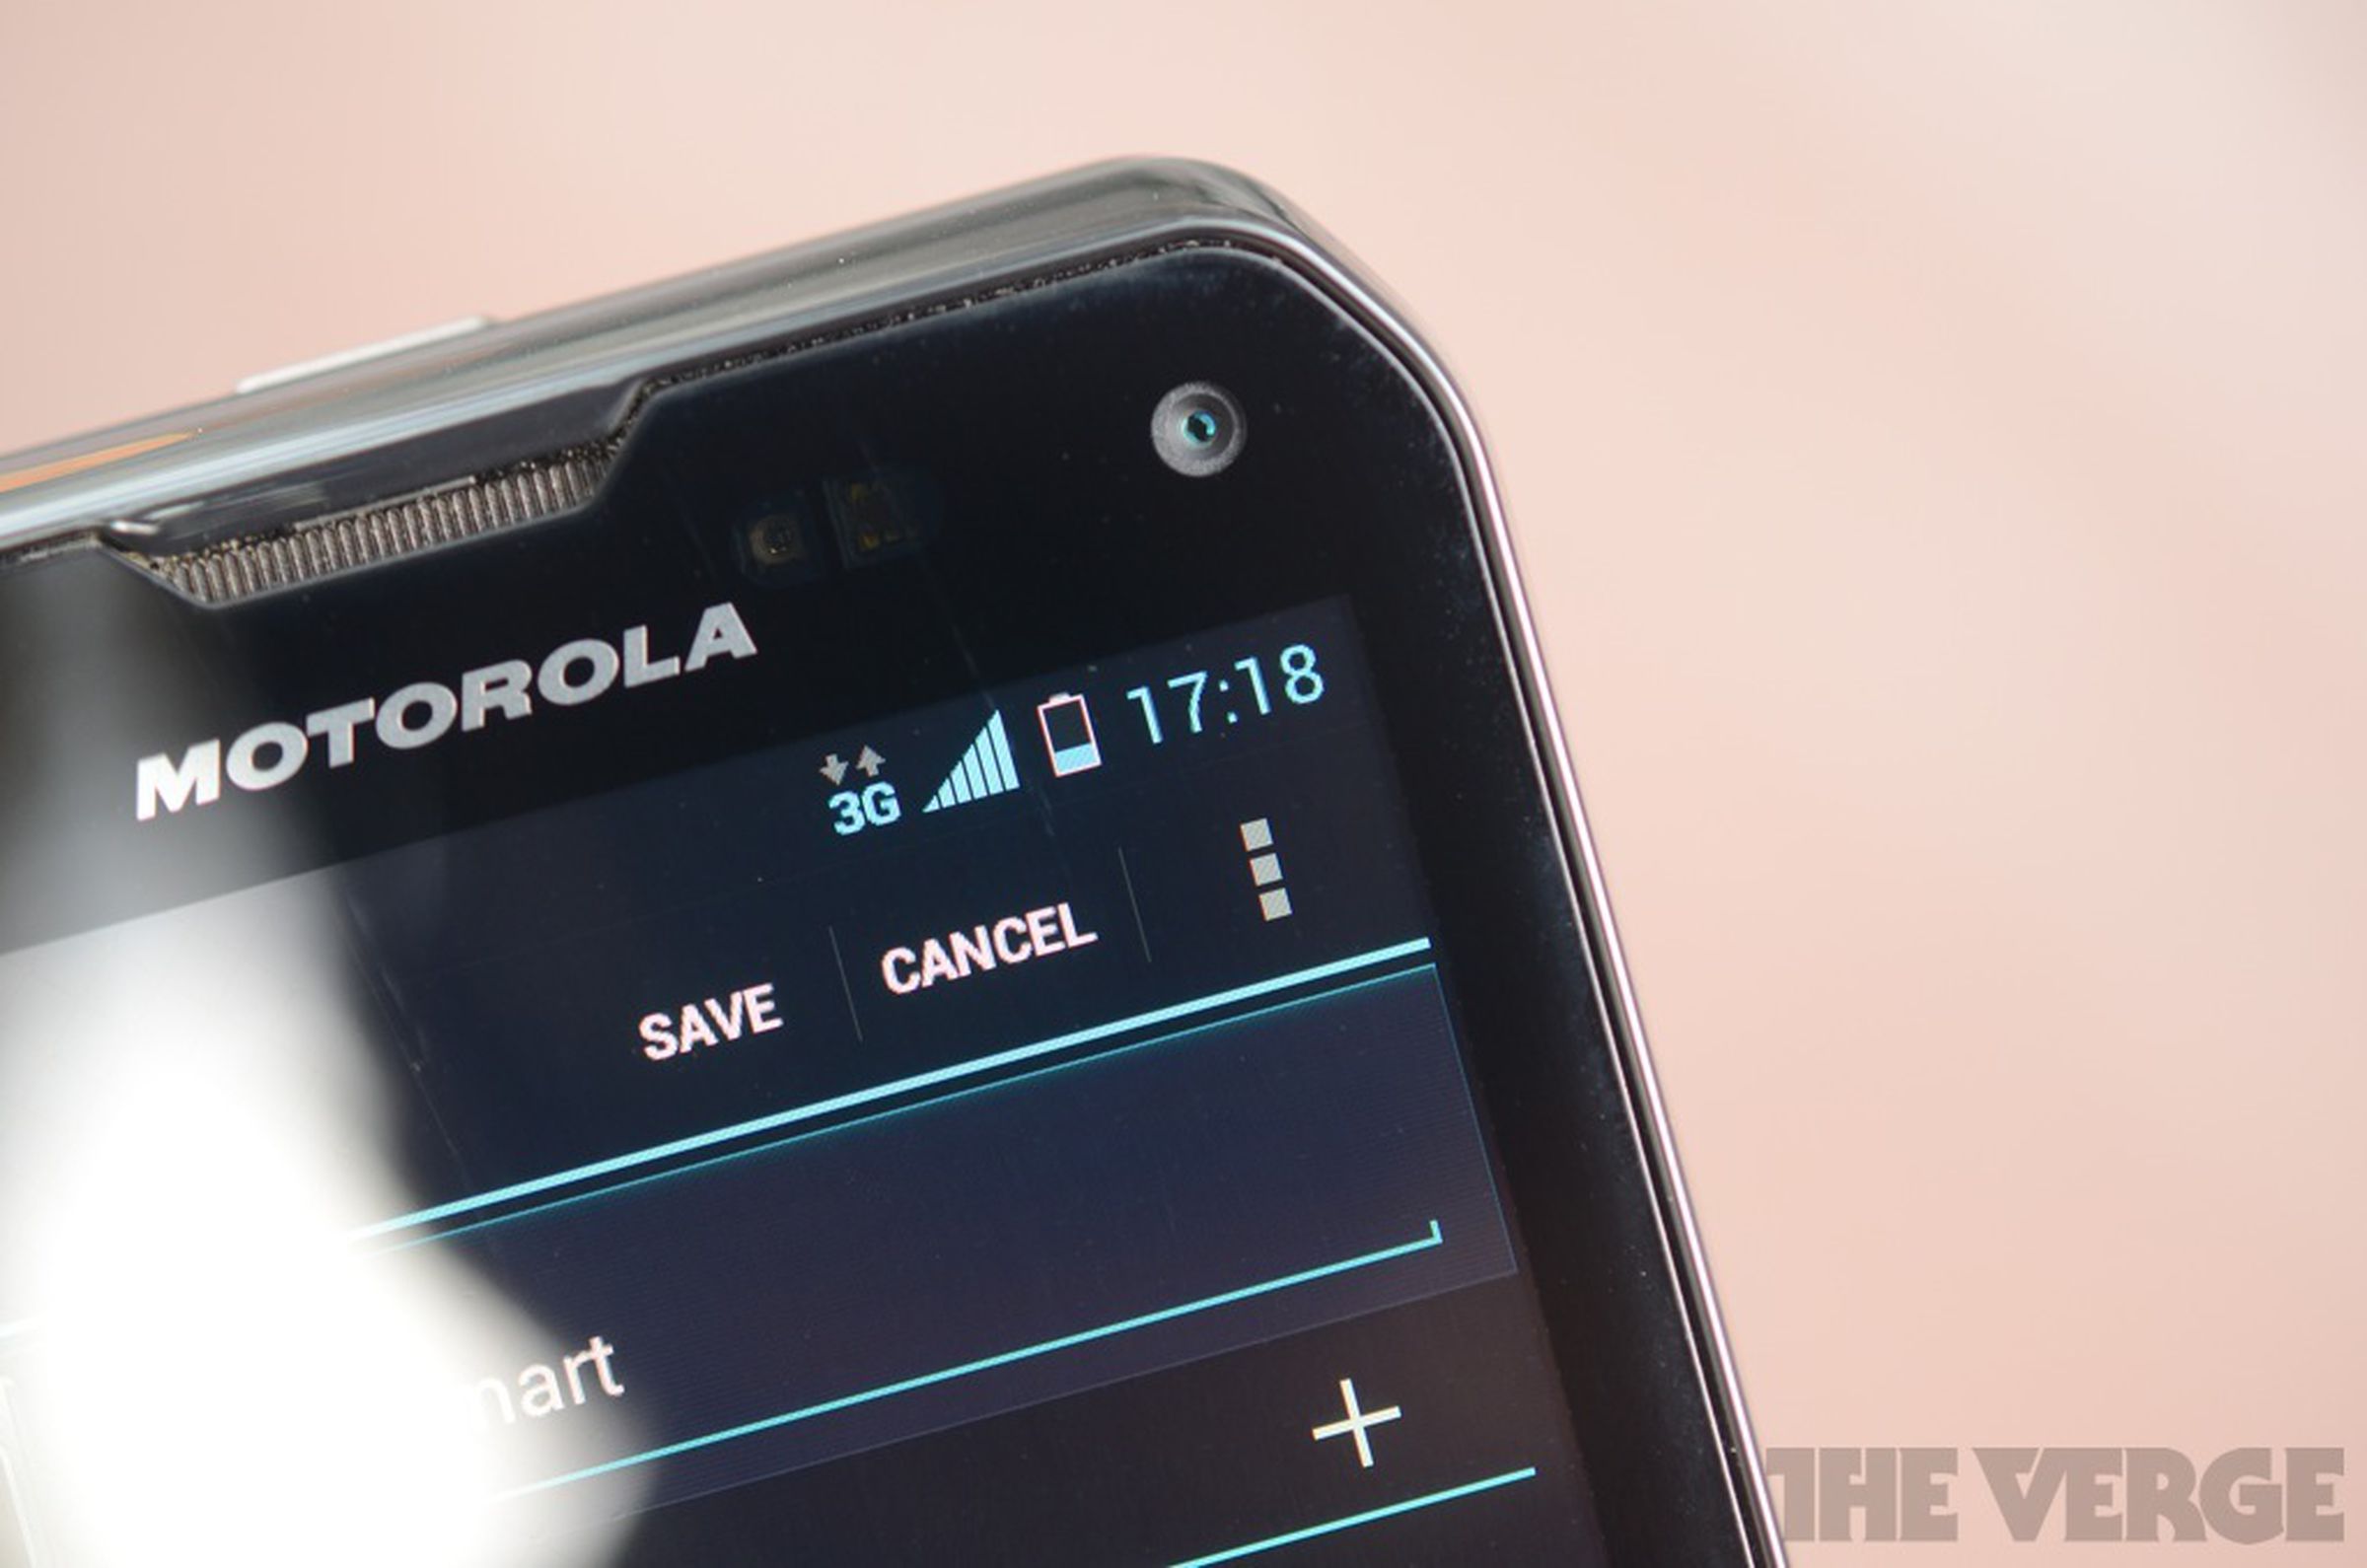 Motorola Photon Q 4G LTE review pictures